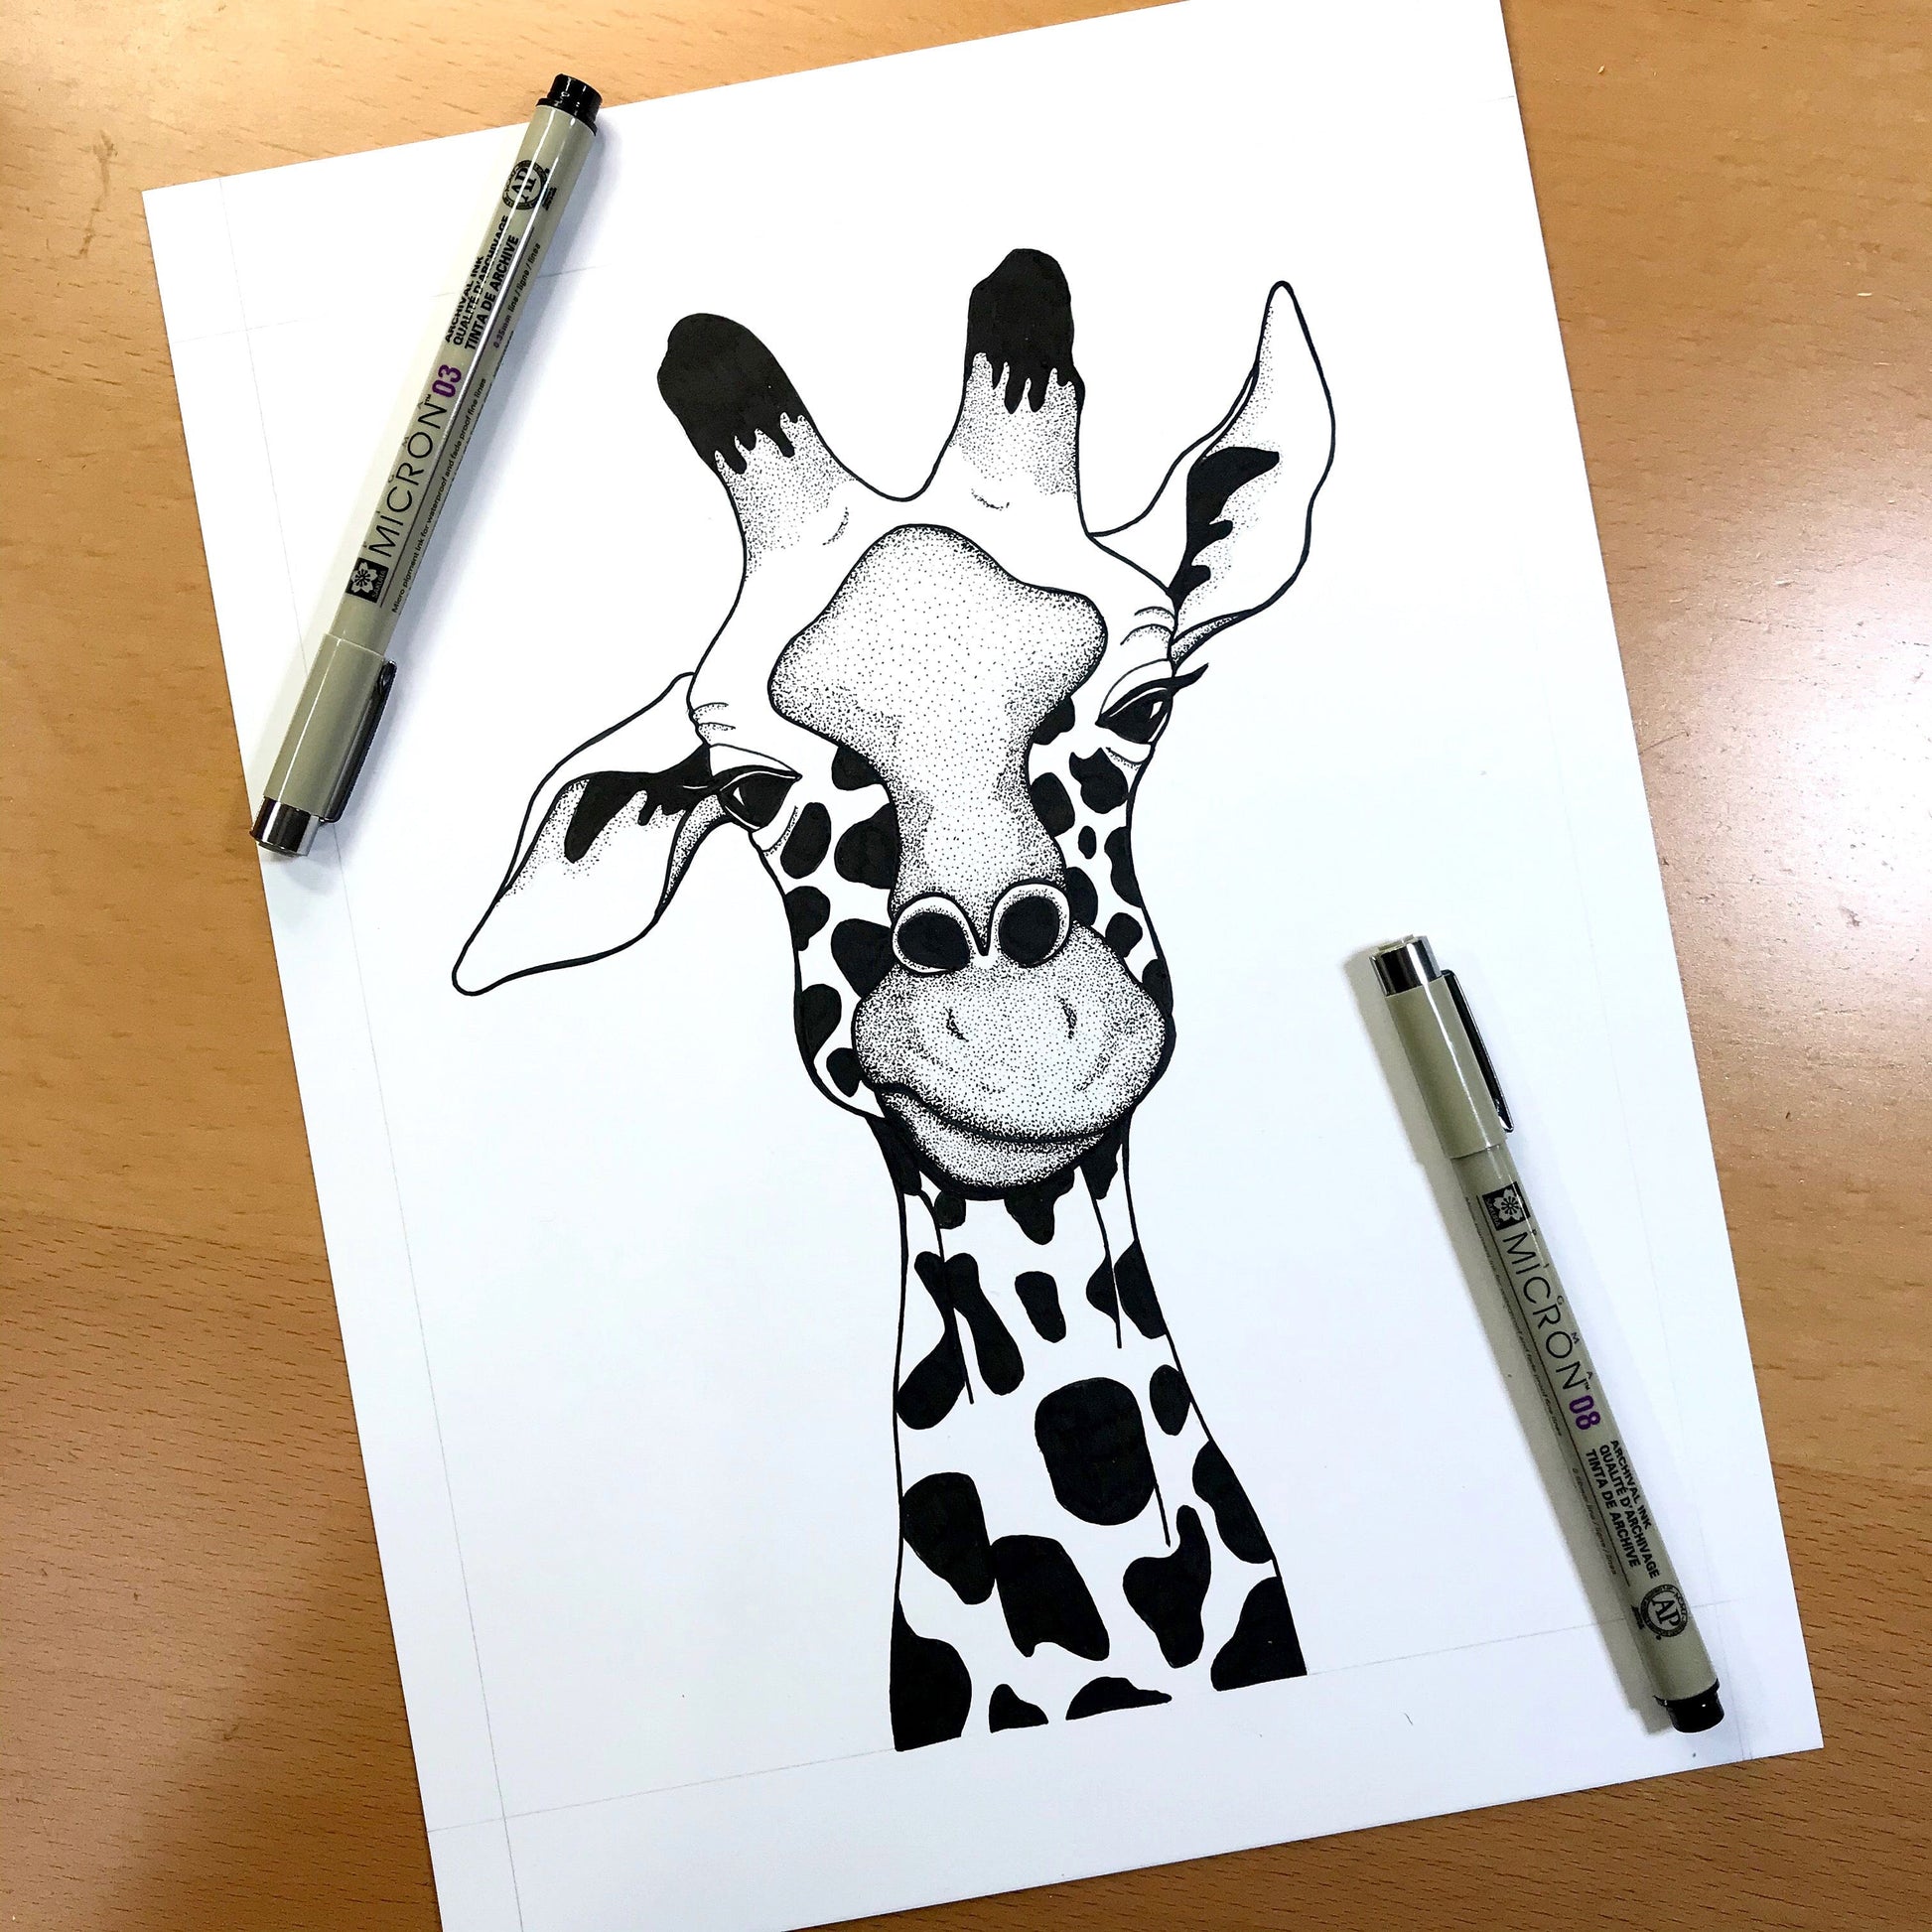 PinkPolish Design Original Art "Annoyed Giraffe" Funny Giraffe Inspired Original Ink Illustration